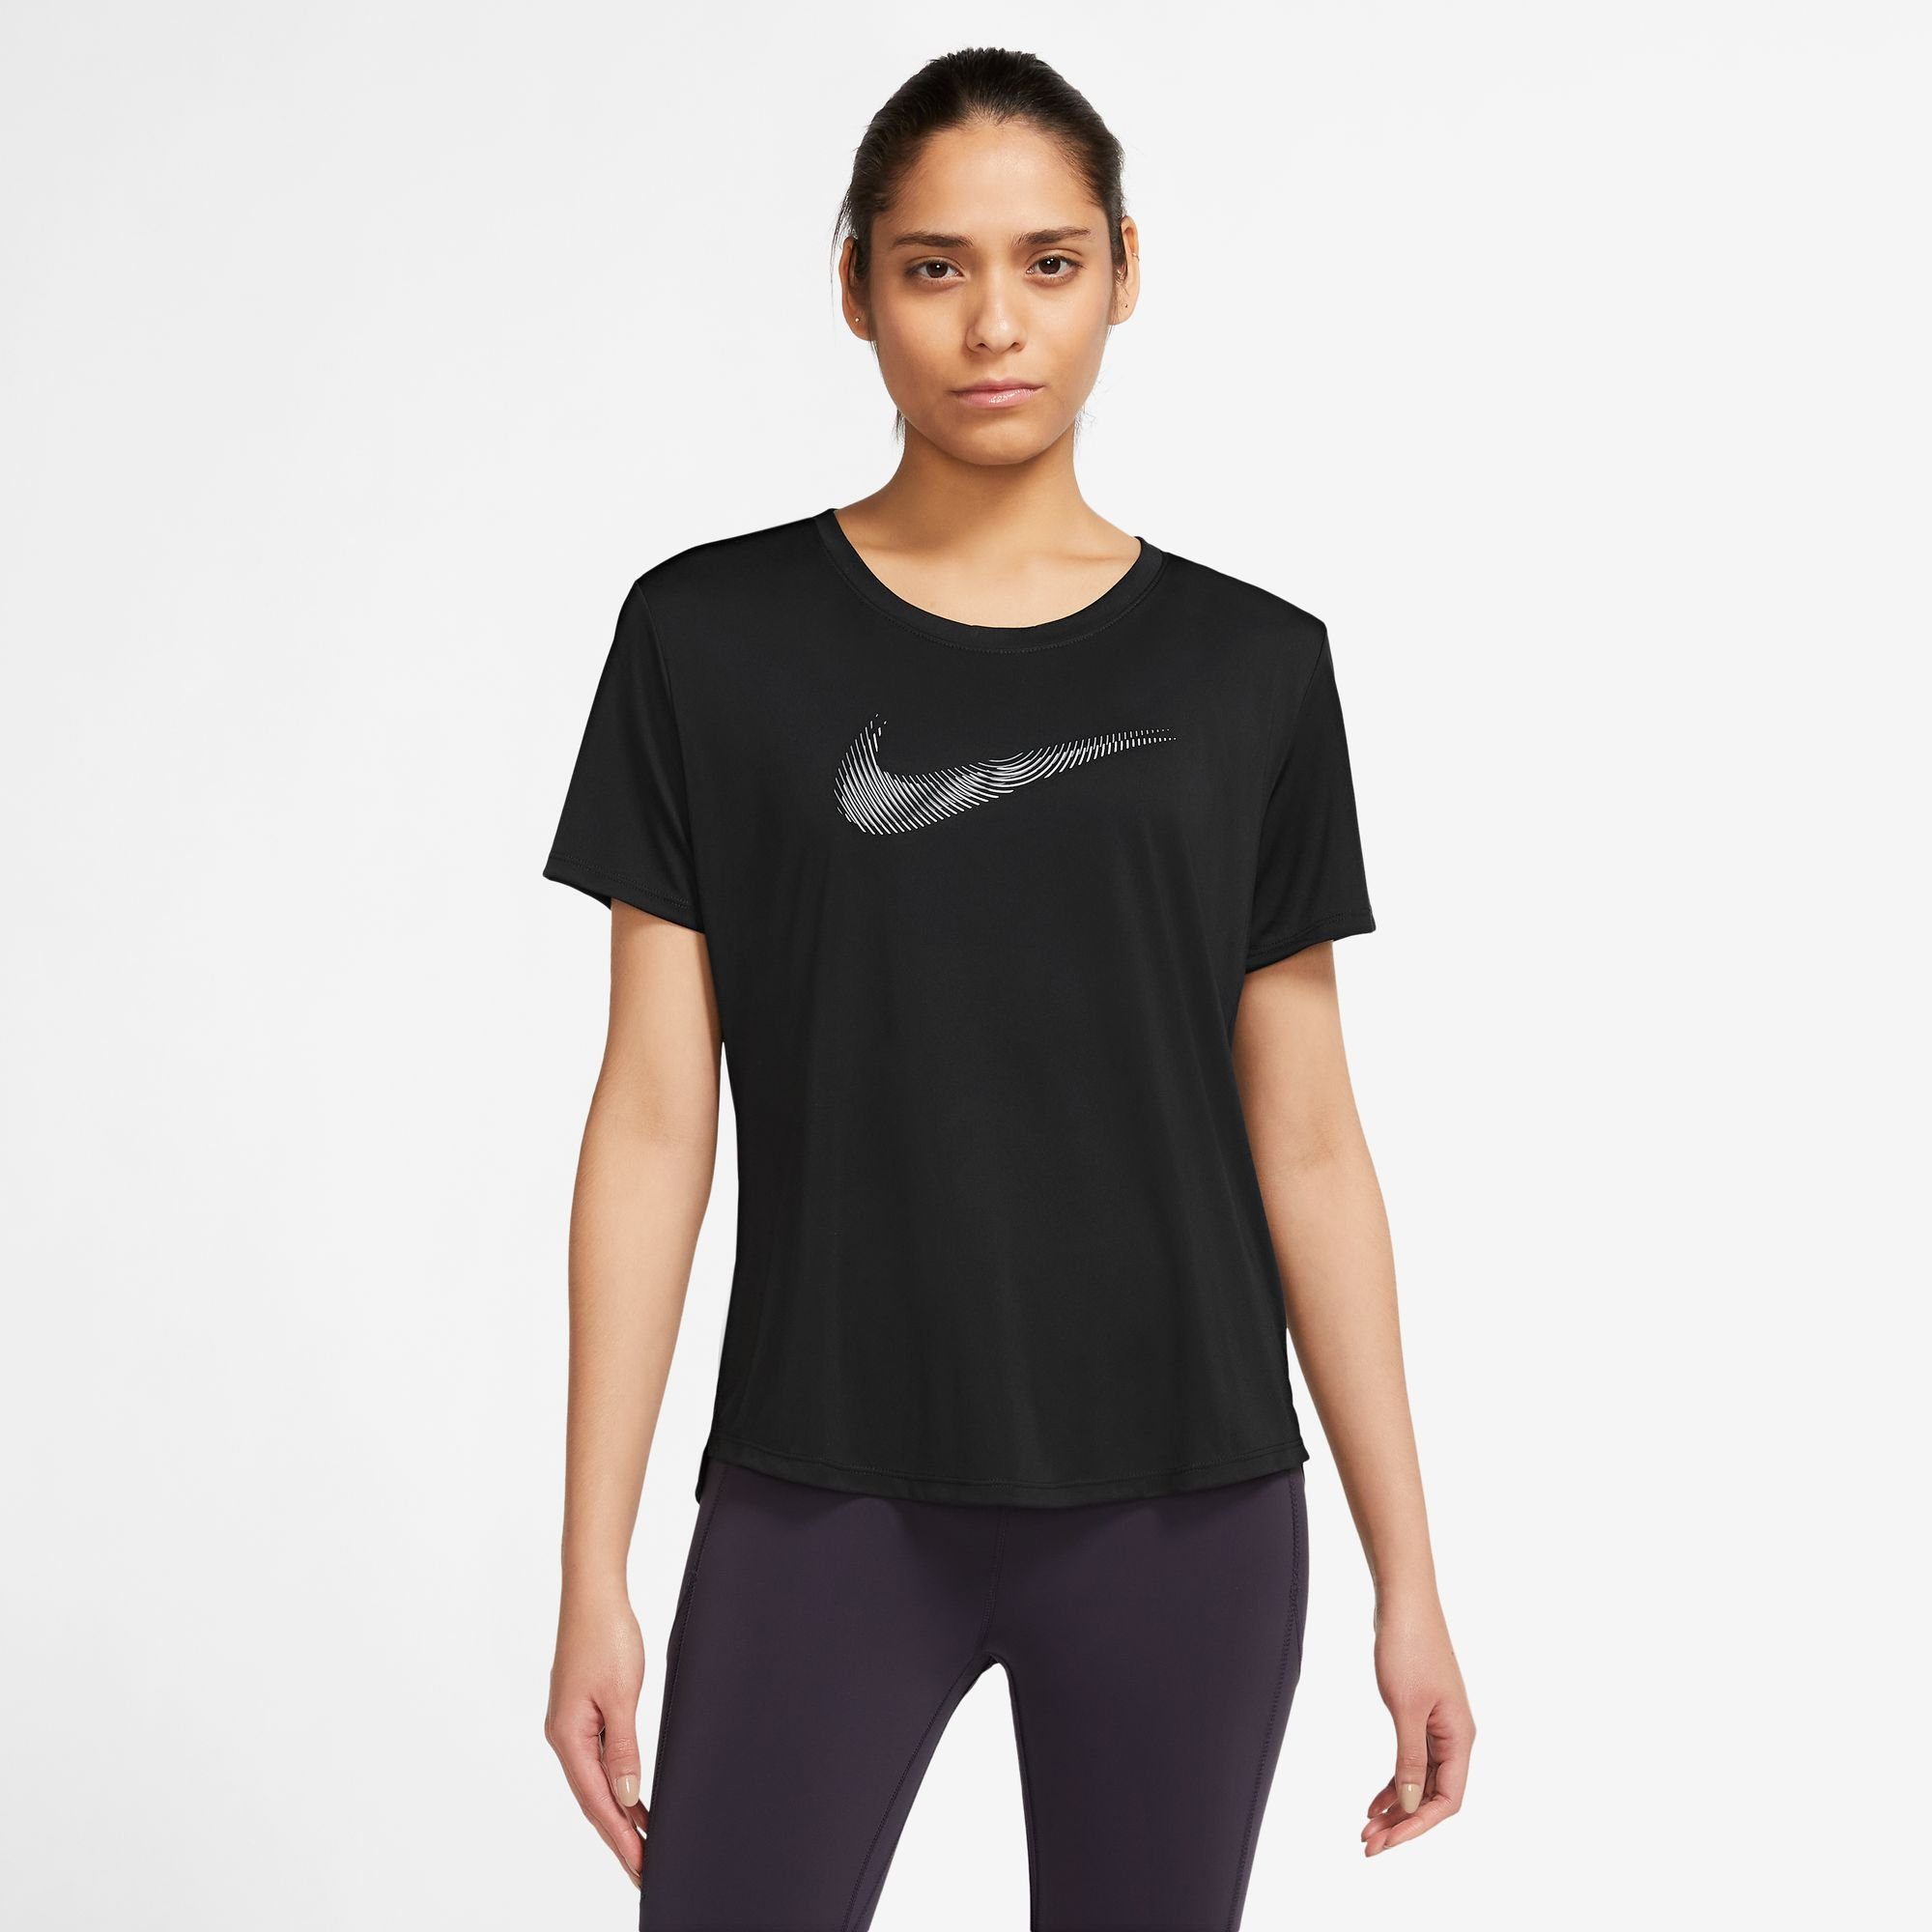 RUNNING Laufshirt BLACK/COOL Nike WOMEN'S DRI-FIT TOP GREY SWOOSH SHORT-SLEEVE